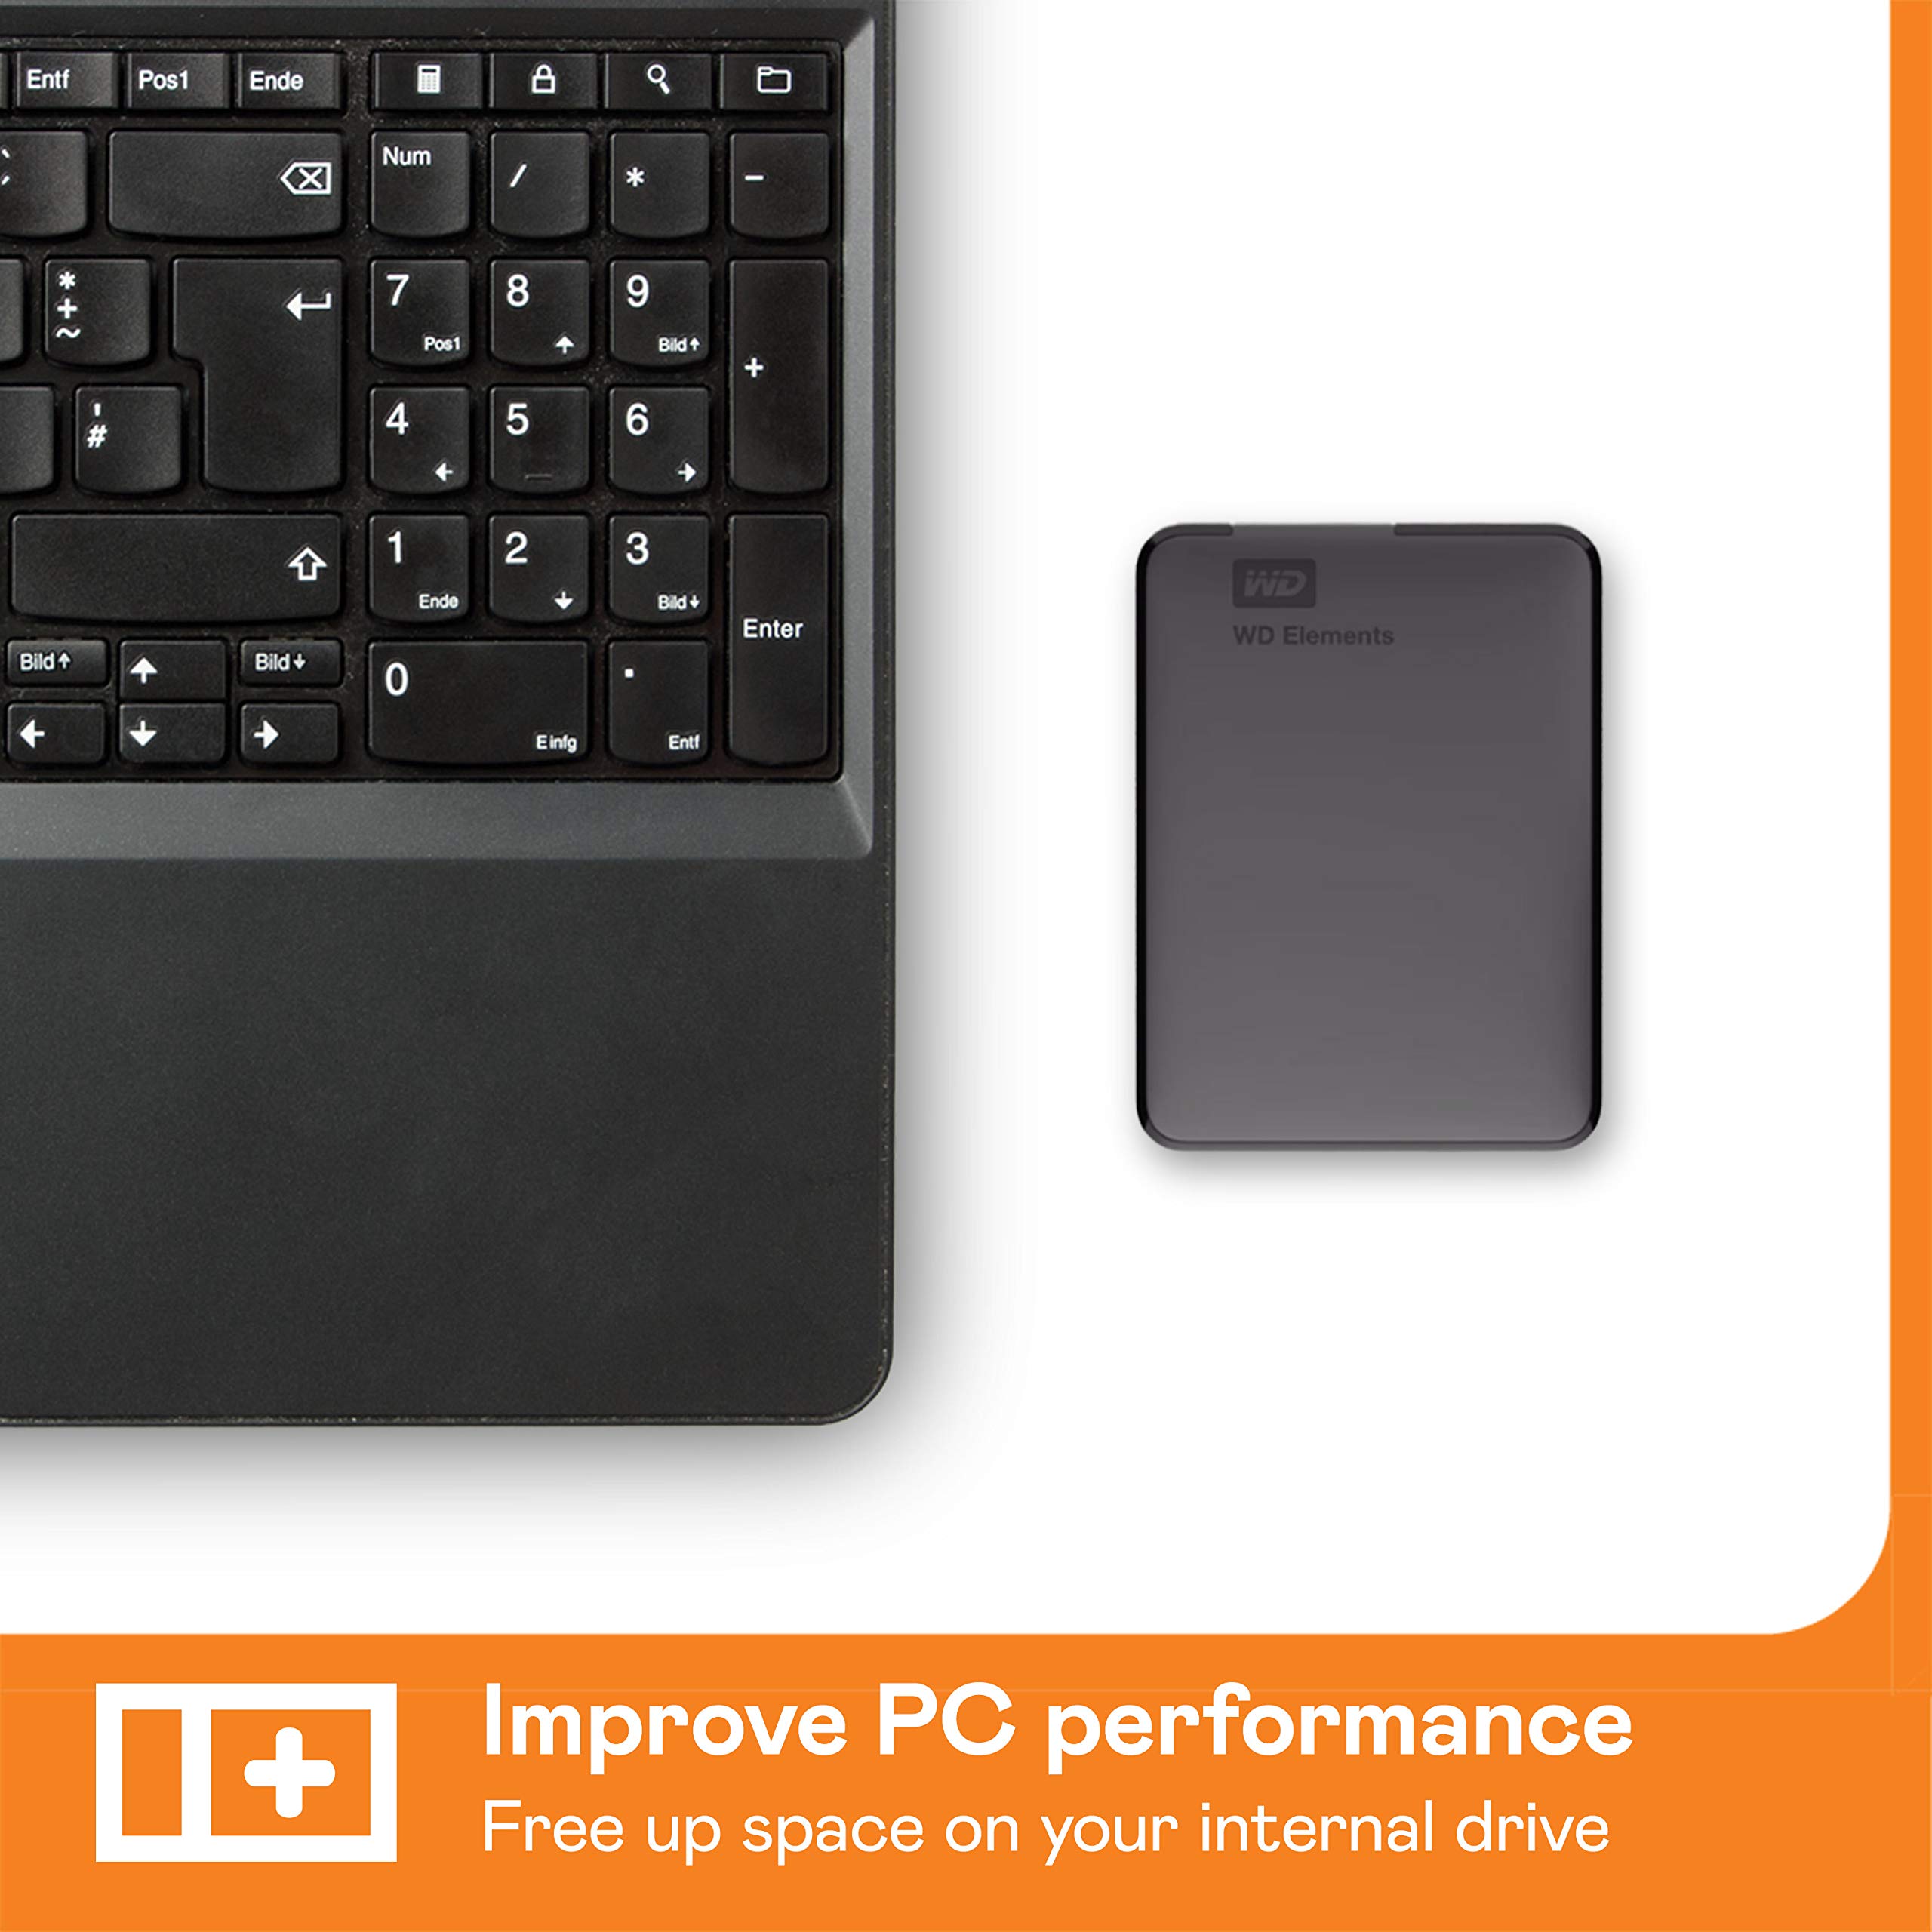 WD 1TB Elements Portable HDD, External Hard Drive, USB 3.0 for PC & Mac, Plug and Play Ready - WDBUZG0010BBK-WESN, Black